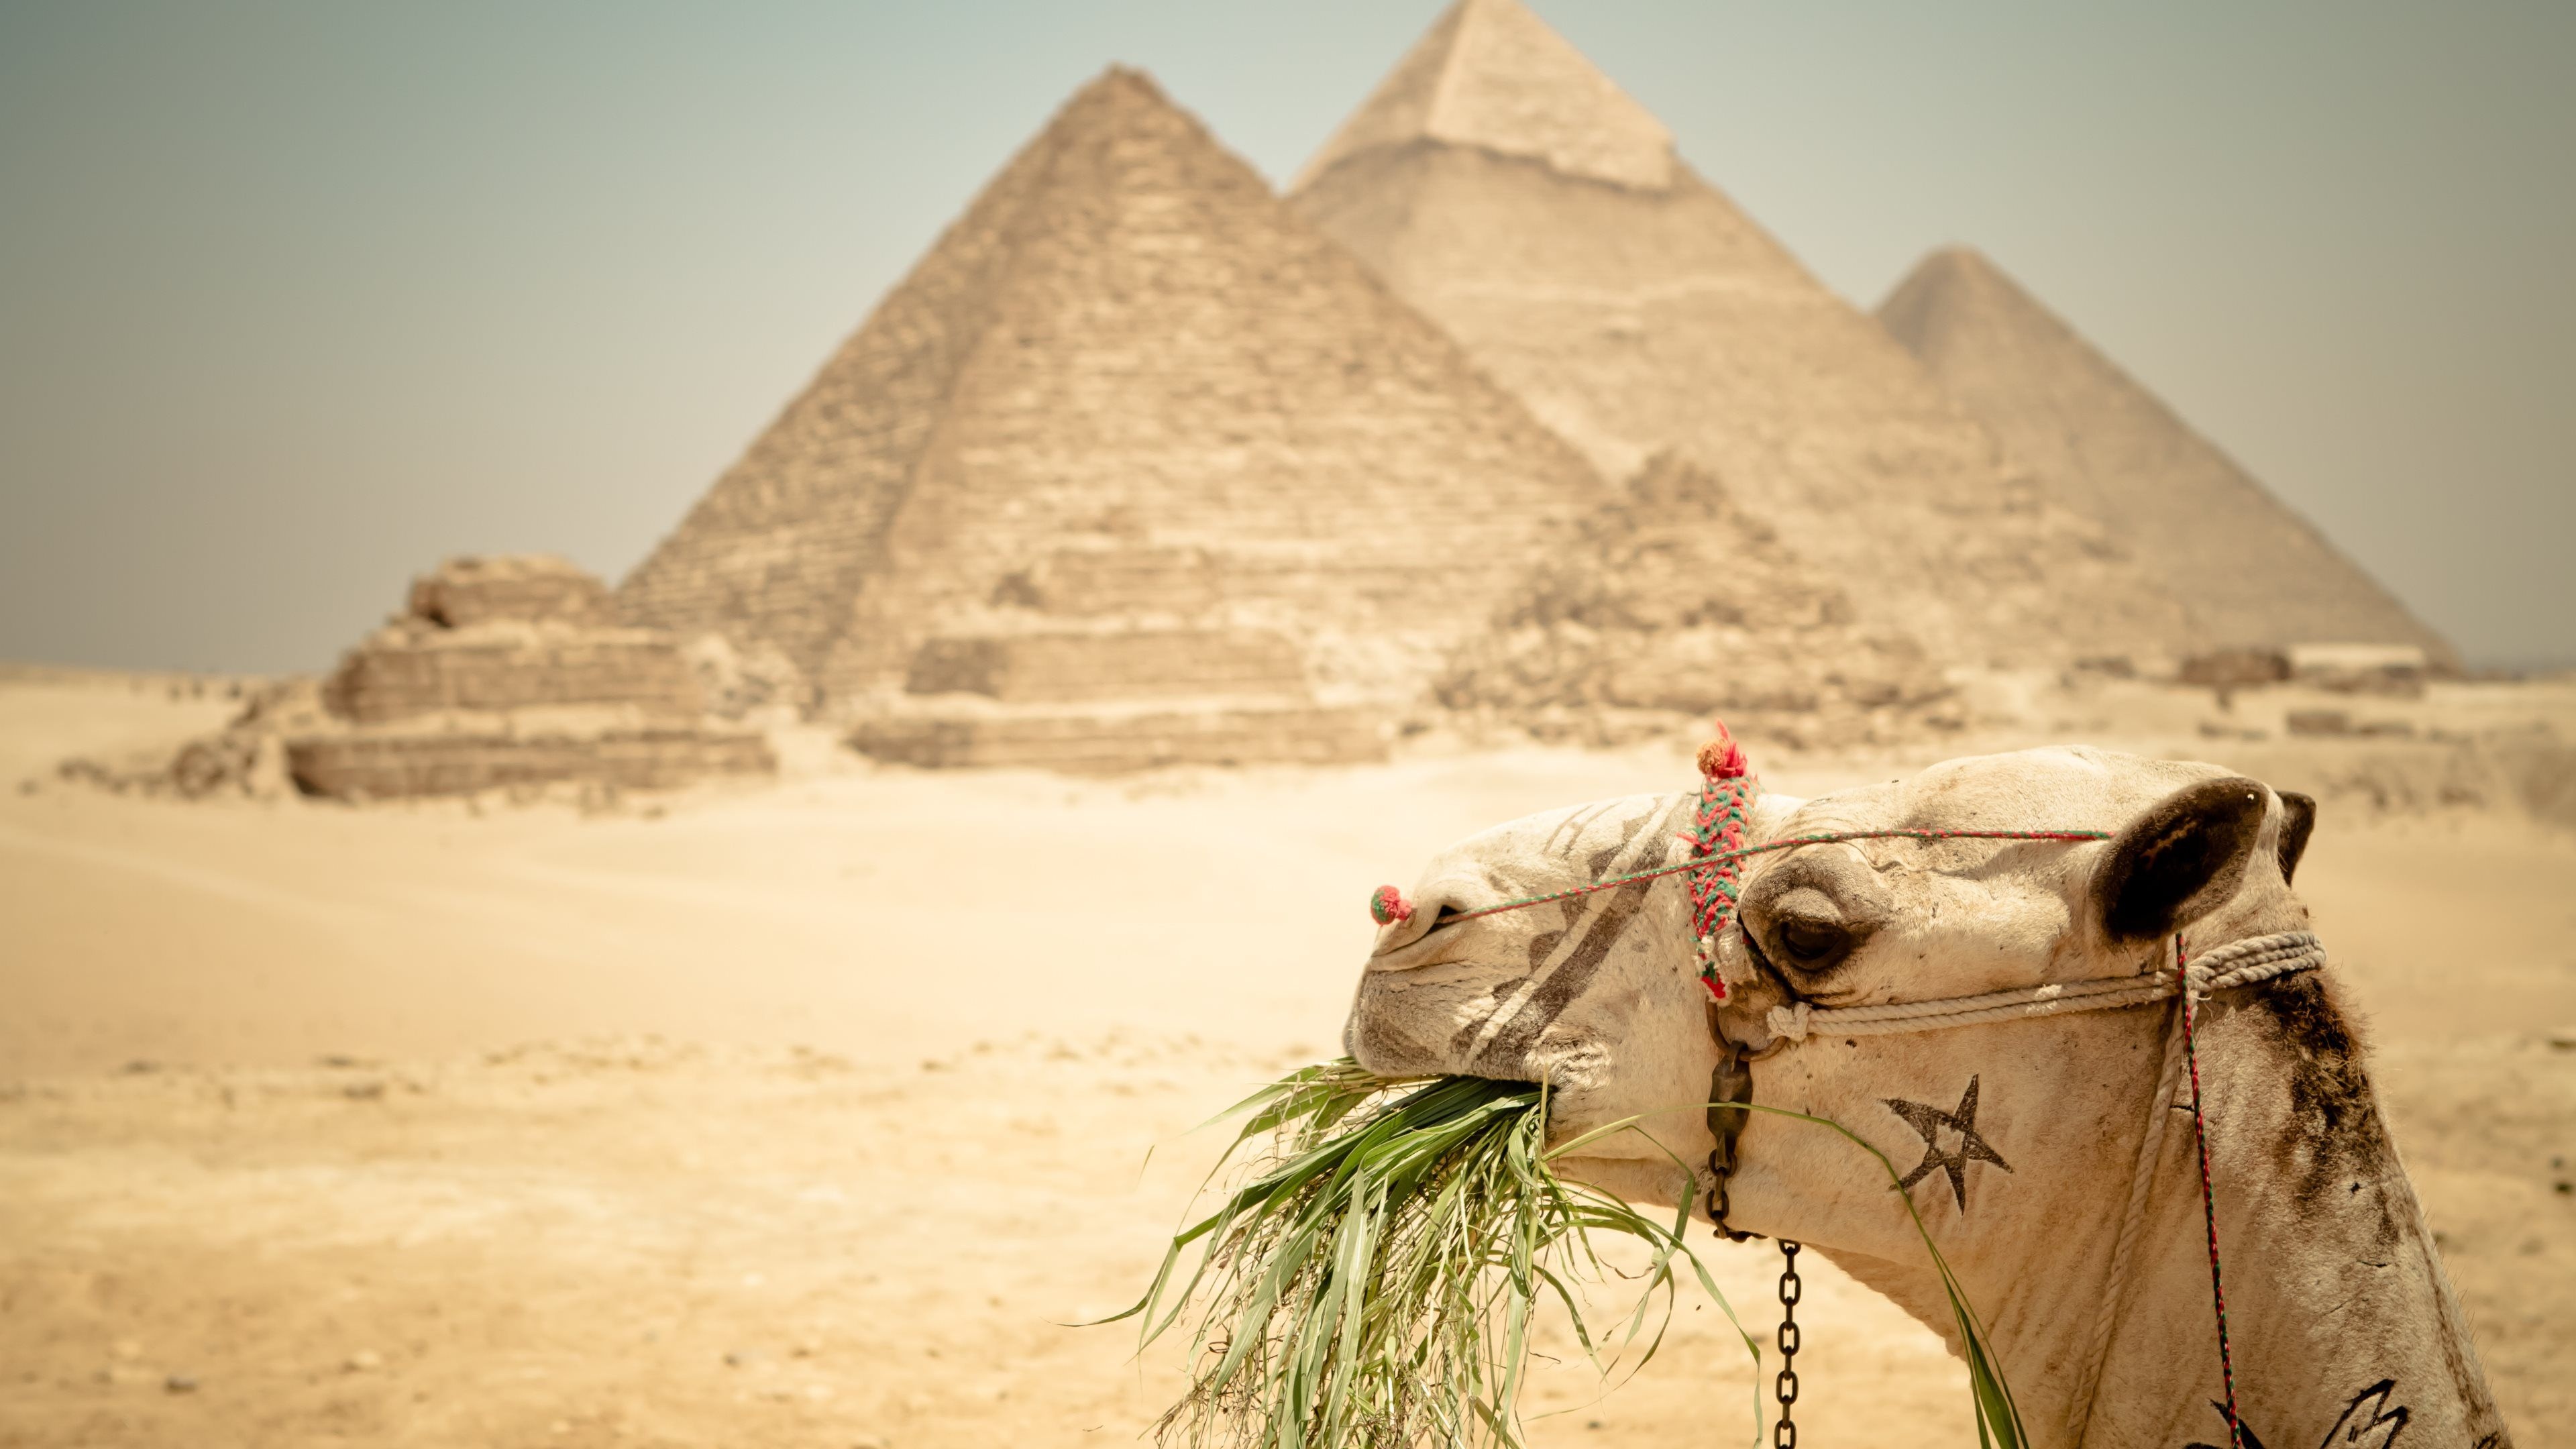 Cairo tours, Pyramids of Giza, Great pyramid of Giza, Luxor travels, 3840x2160 4K Desktop